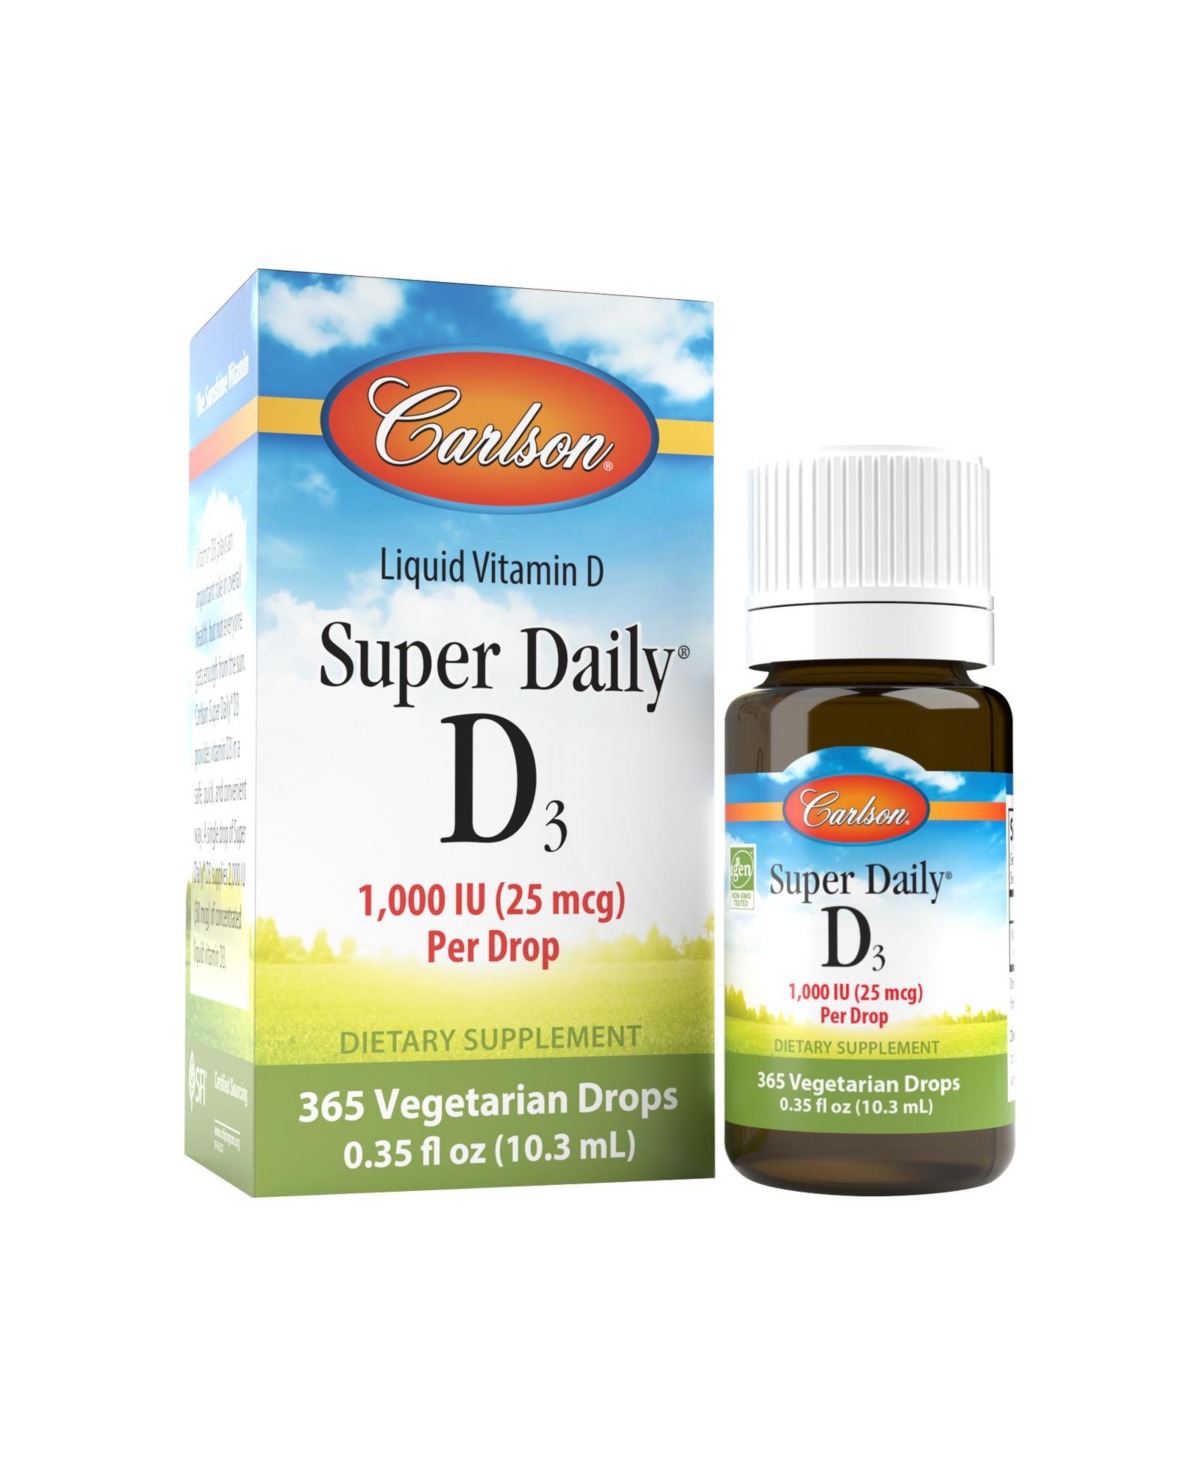 Carlson - Super Daily D3 1,000 Iu (25 mcg) per Drop, Vitamin D Drops, 1-Year Supply, Vegetarian, Unflavored, 365 Drops